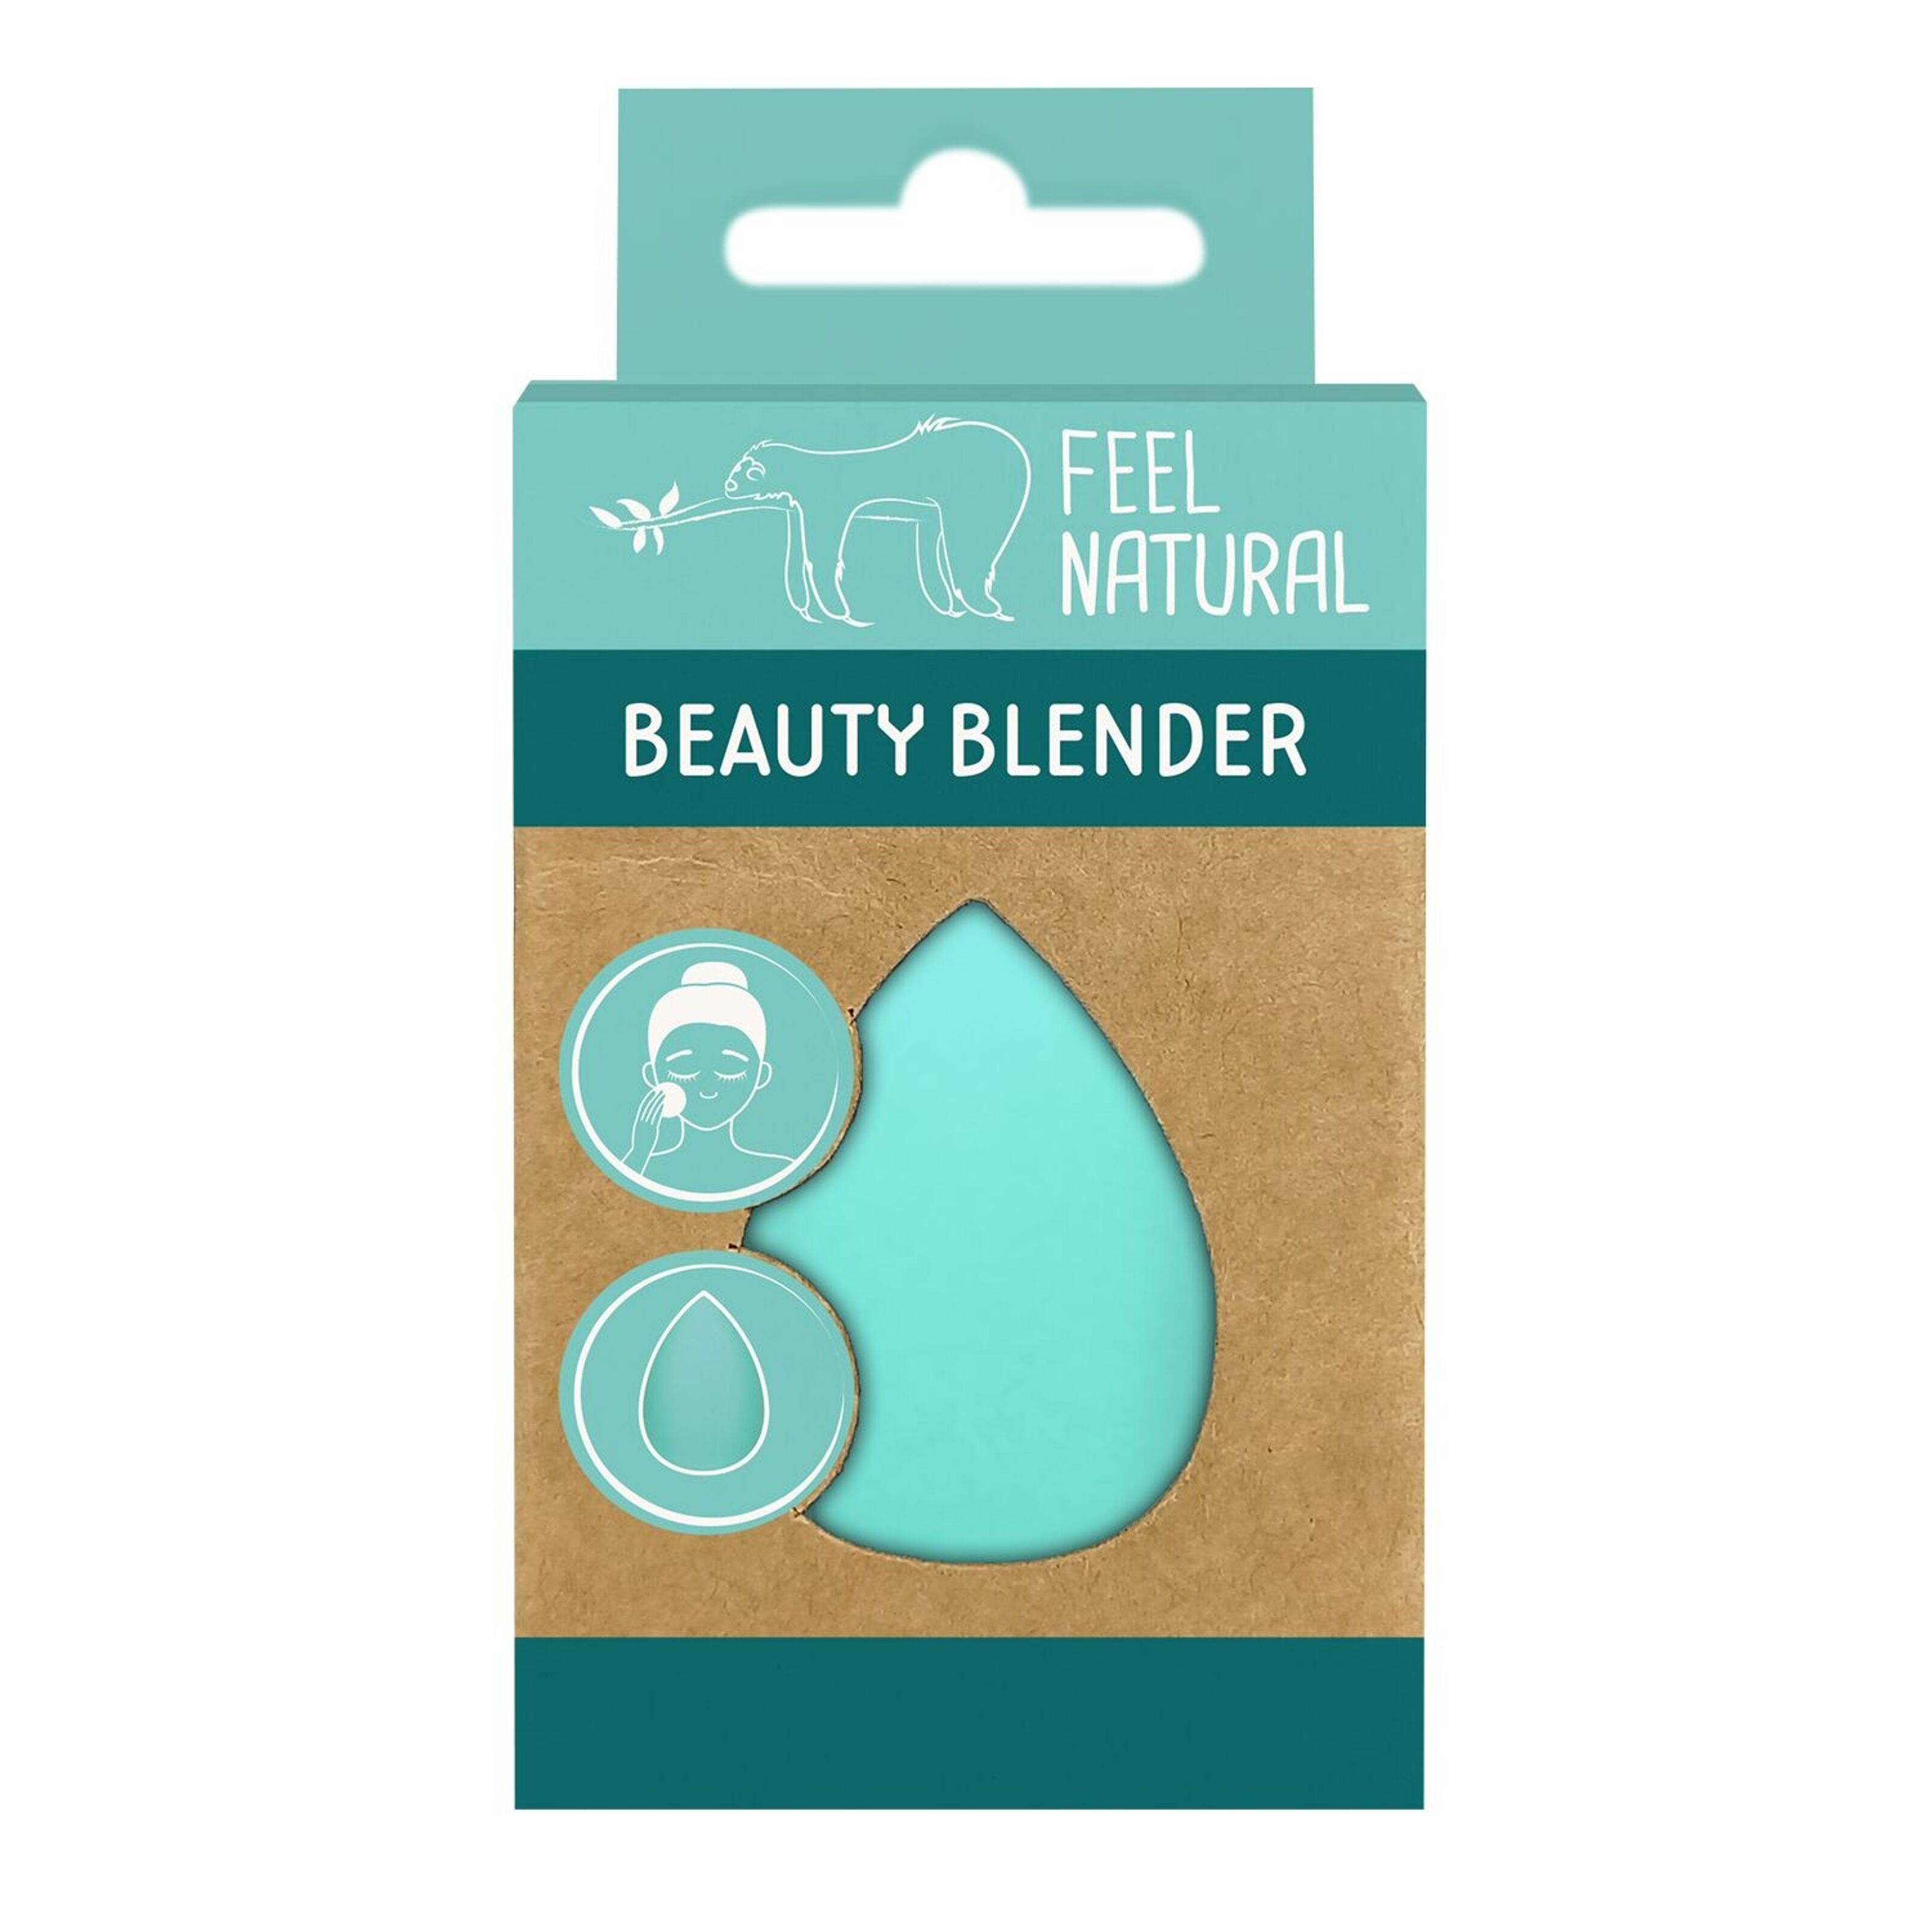 Achat Beauty Blender - Feel Natural en gros